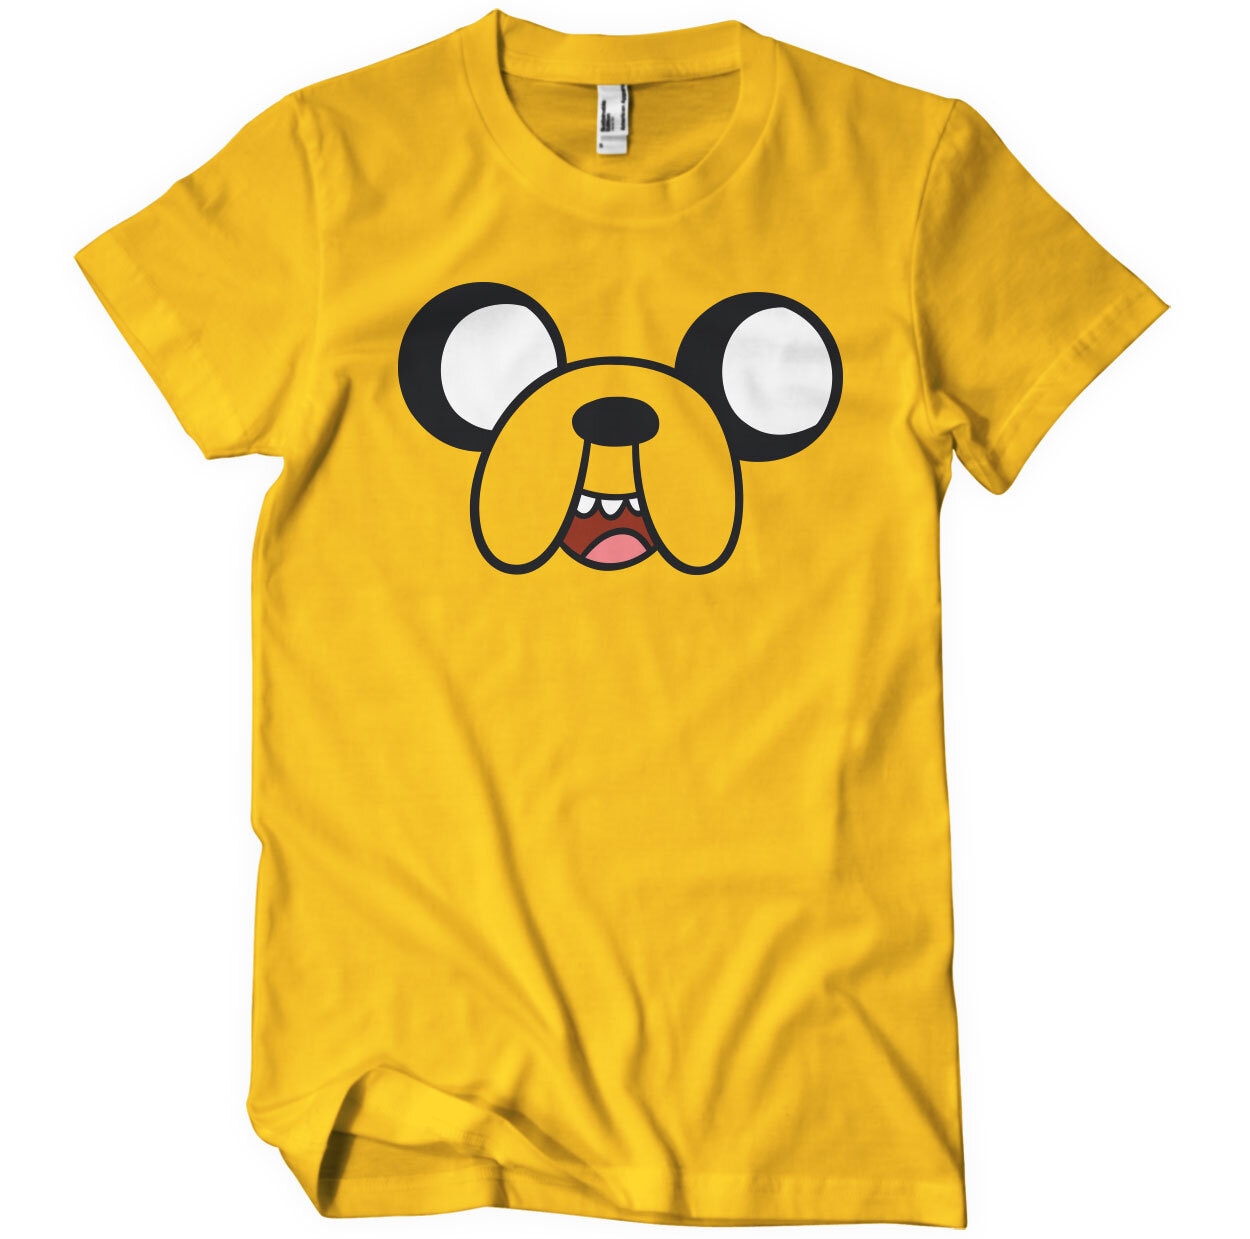 Jake The Dog T-Shirt